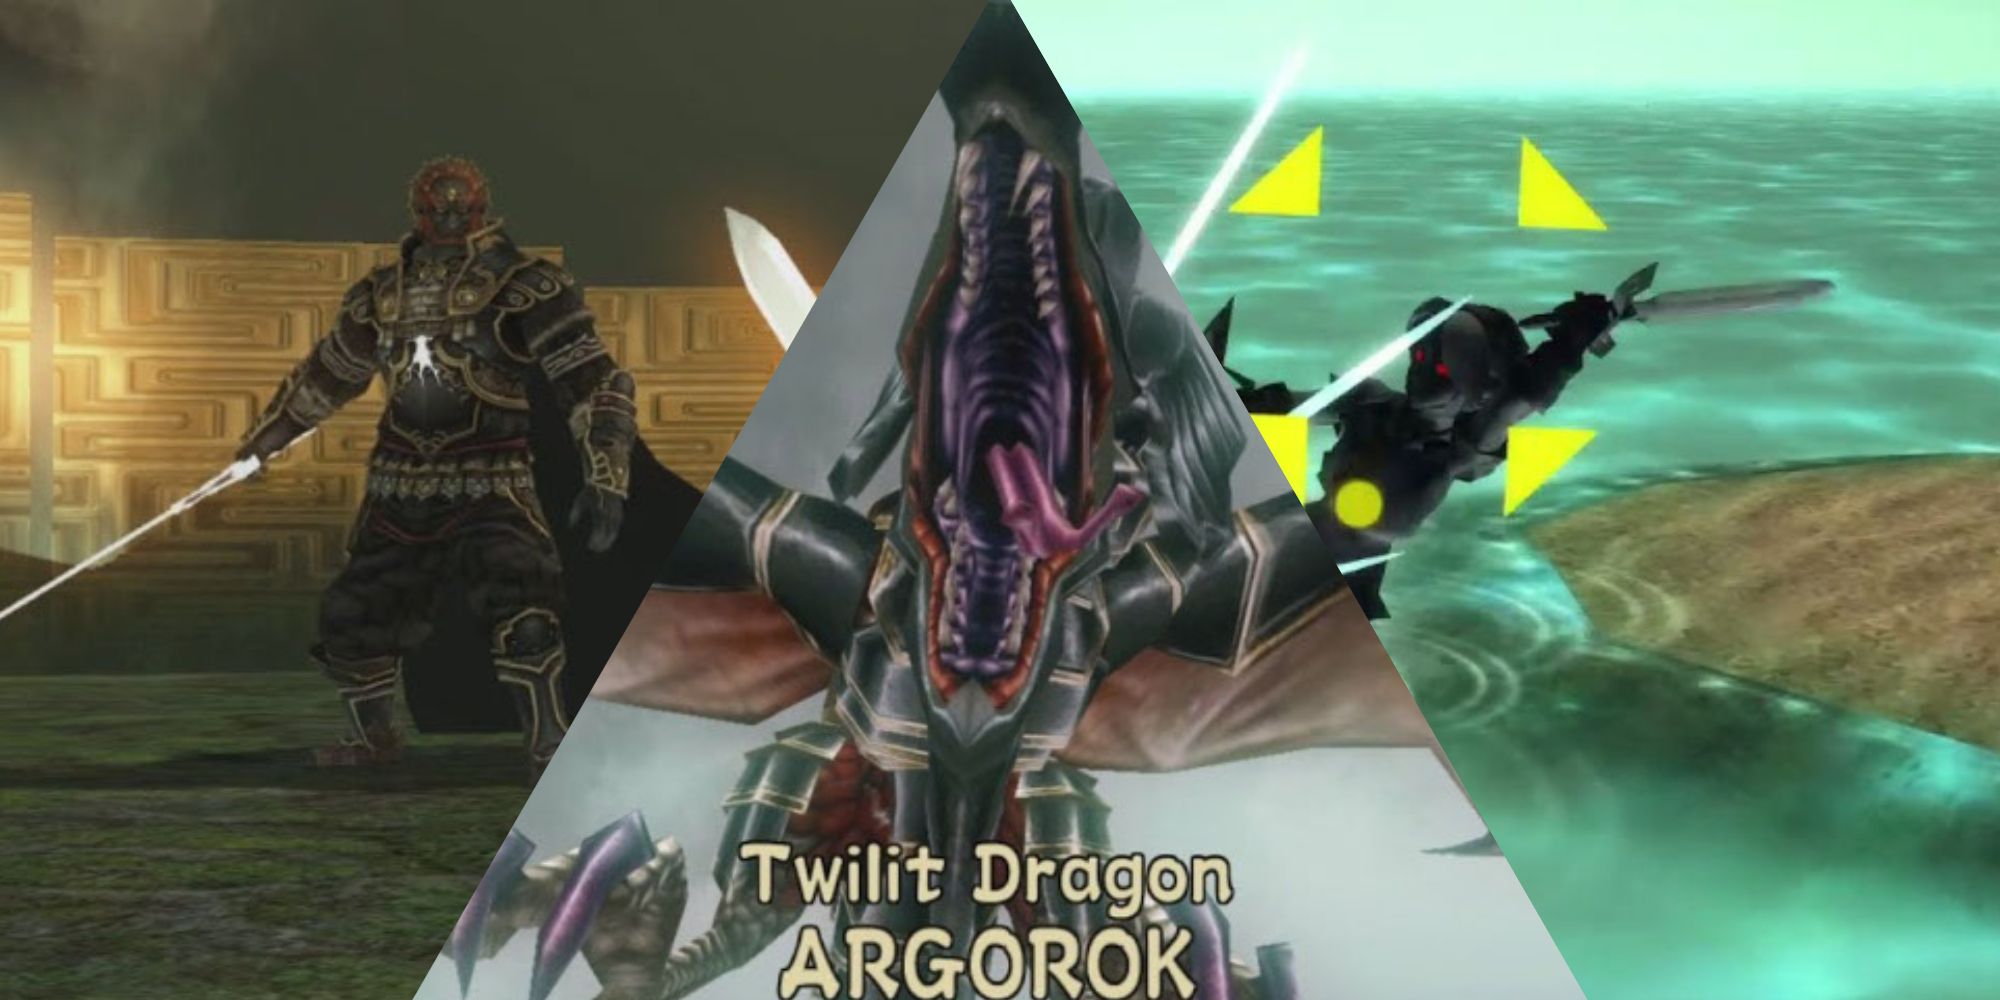 Ganondorf, Argorok the dragon, and Shadow Link